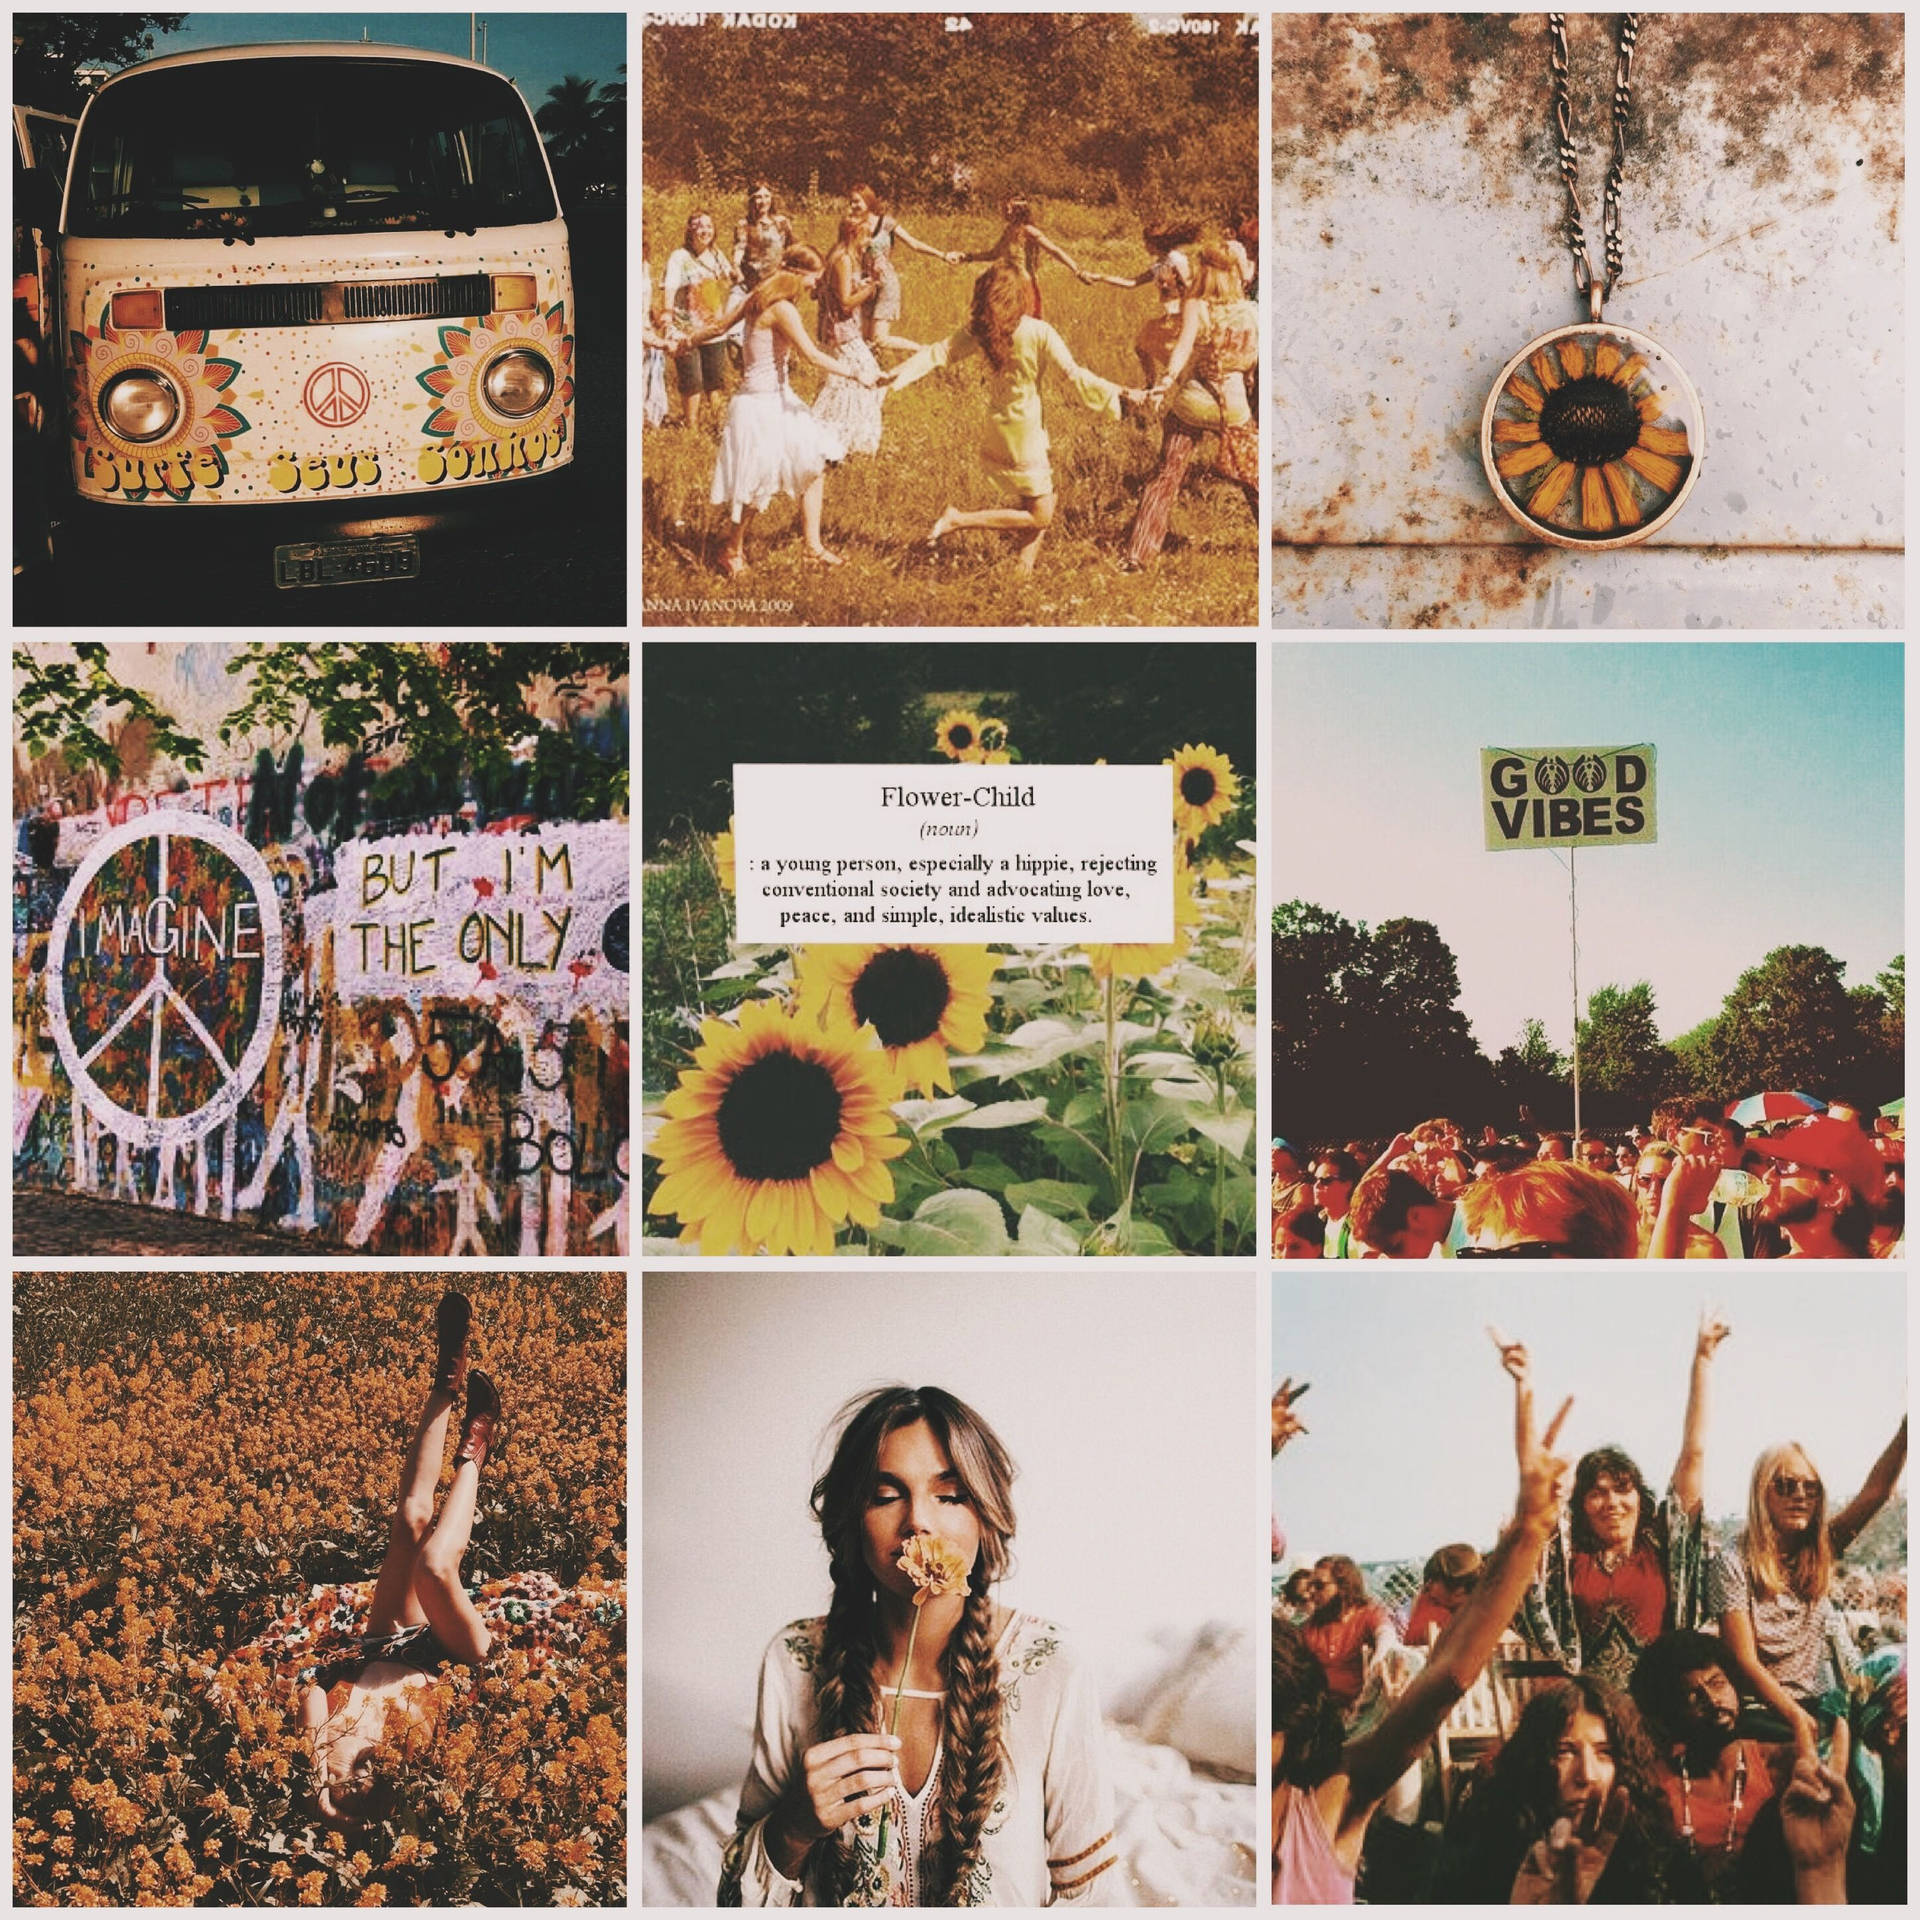 Caption: Vintage Display Of Hippie Culture Background